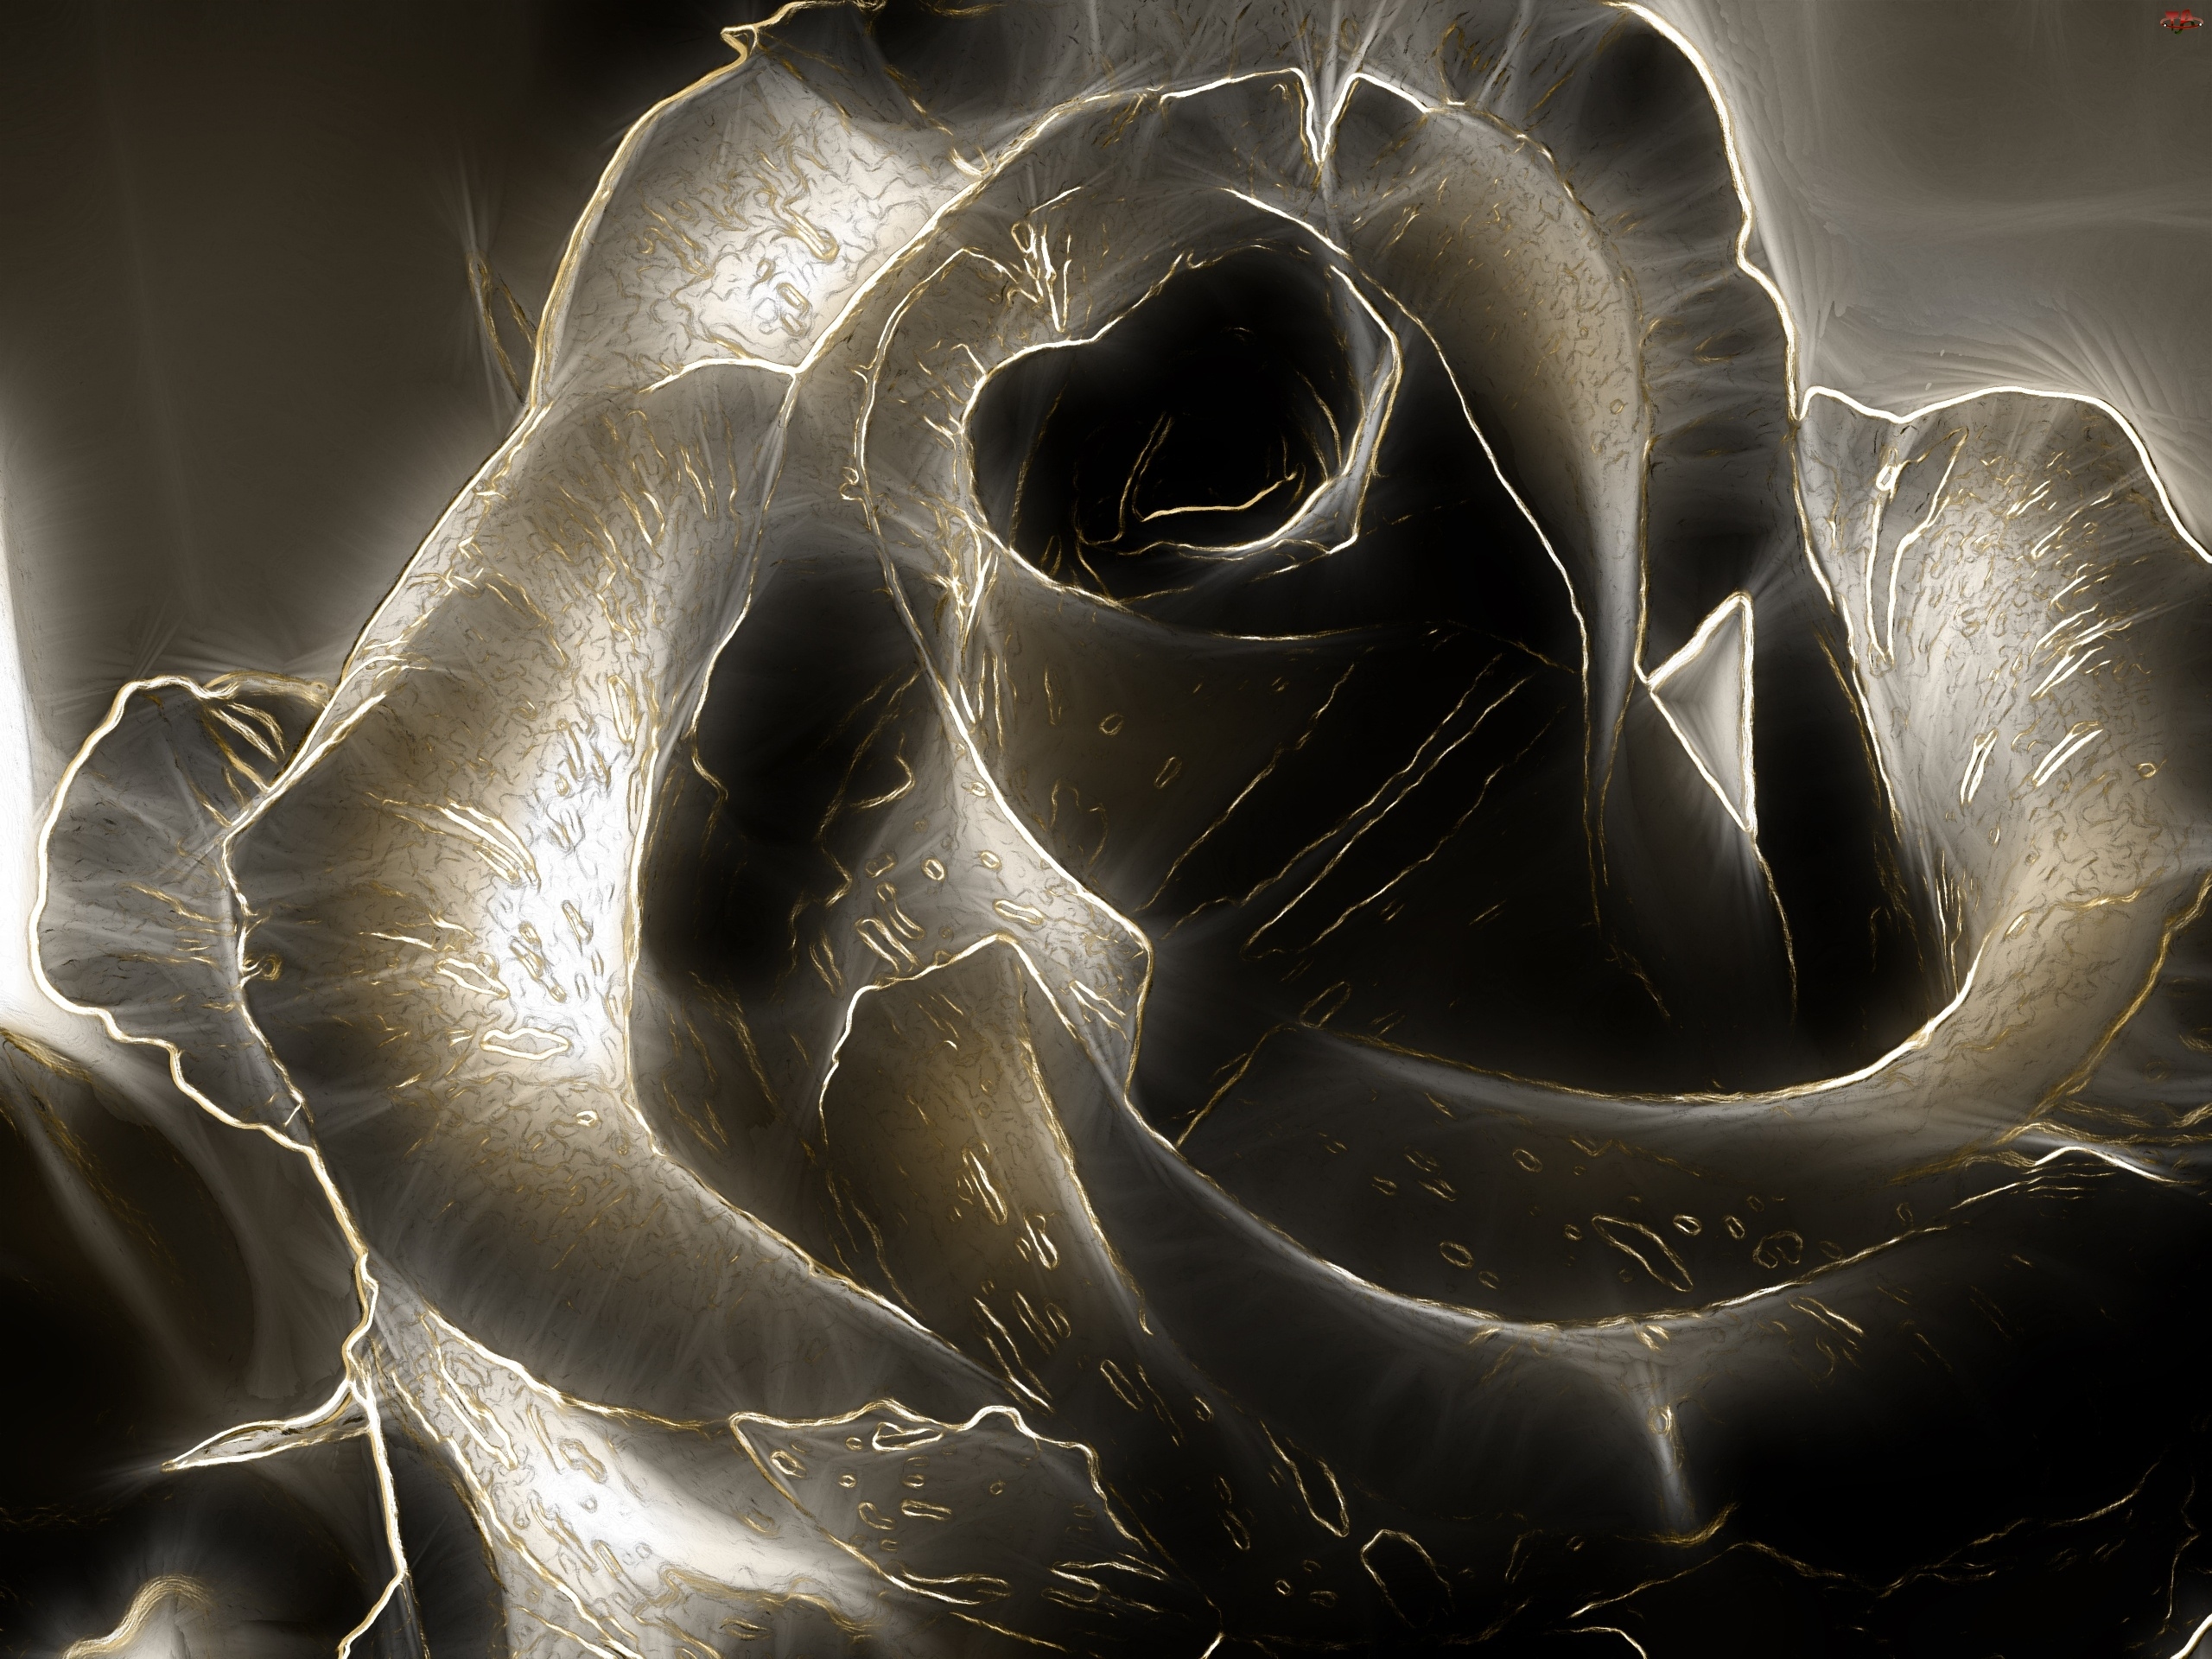 Free download Black Rose wallpaper ForWallpapercom [2560x1920] for your